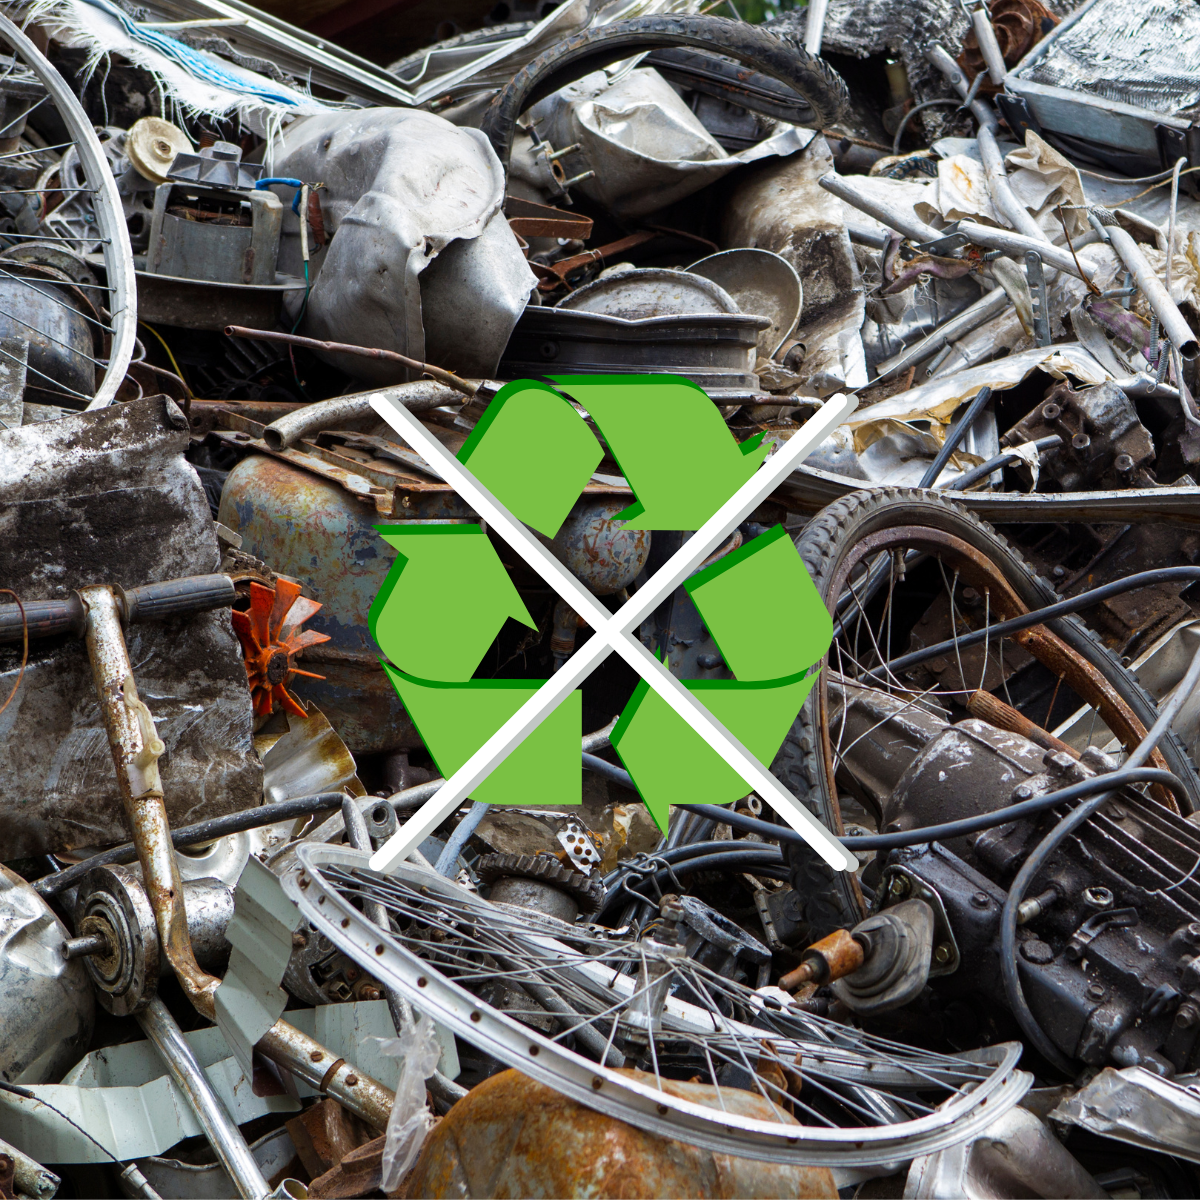 Three Disadvantages of Recycling Metals